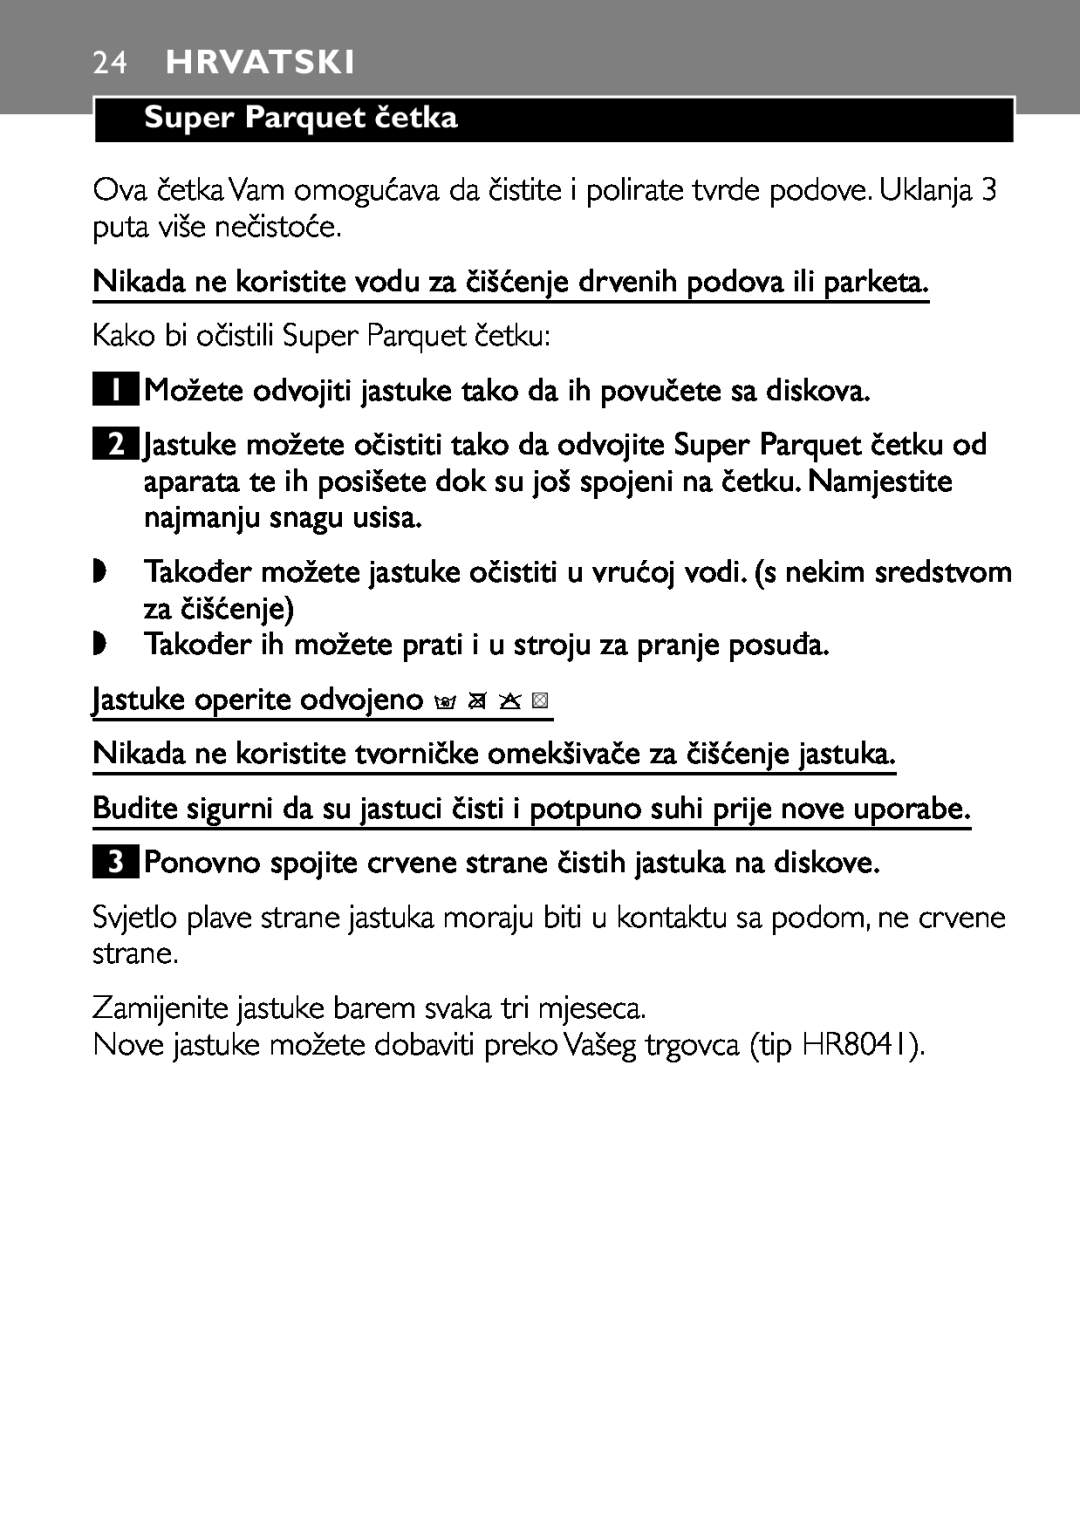 Philips FC8042 manual 24HRVATSKI, Super Parquet četka 